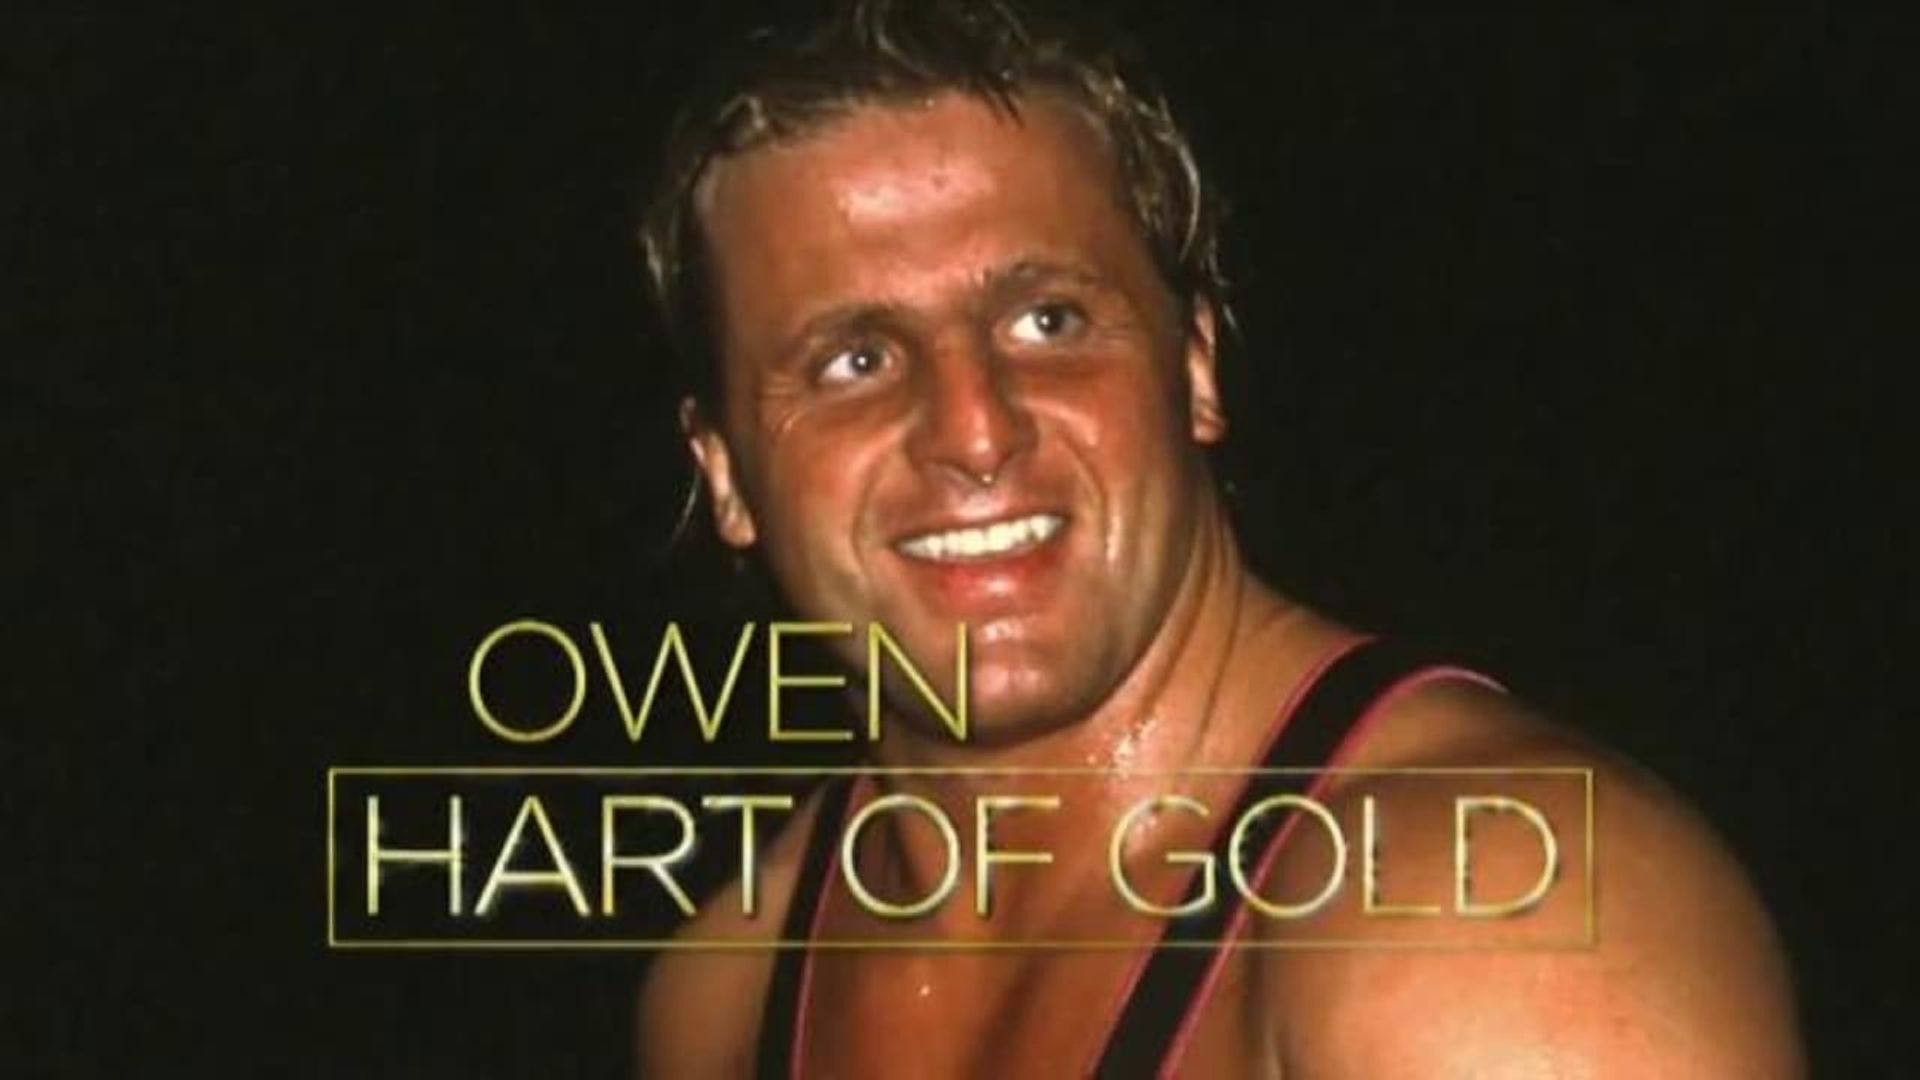 Owen: Hart of Gold background